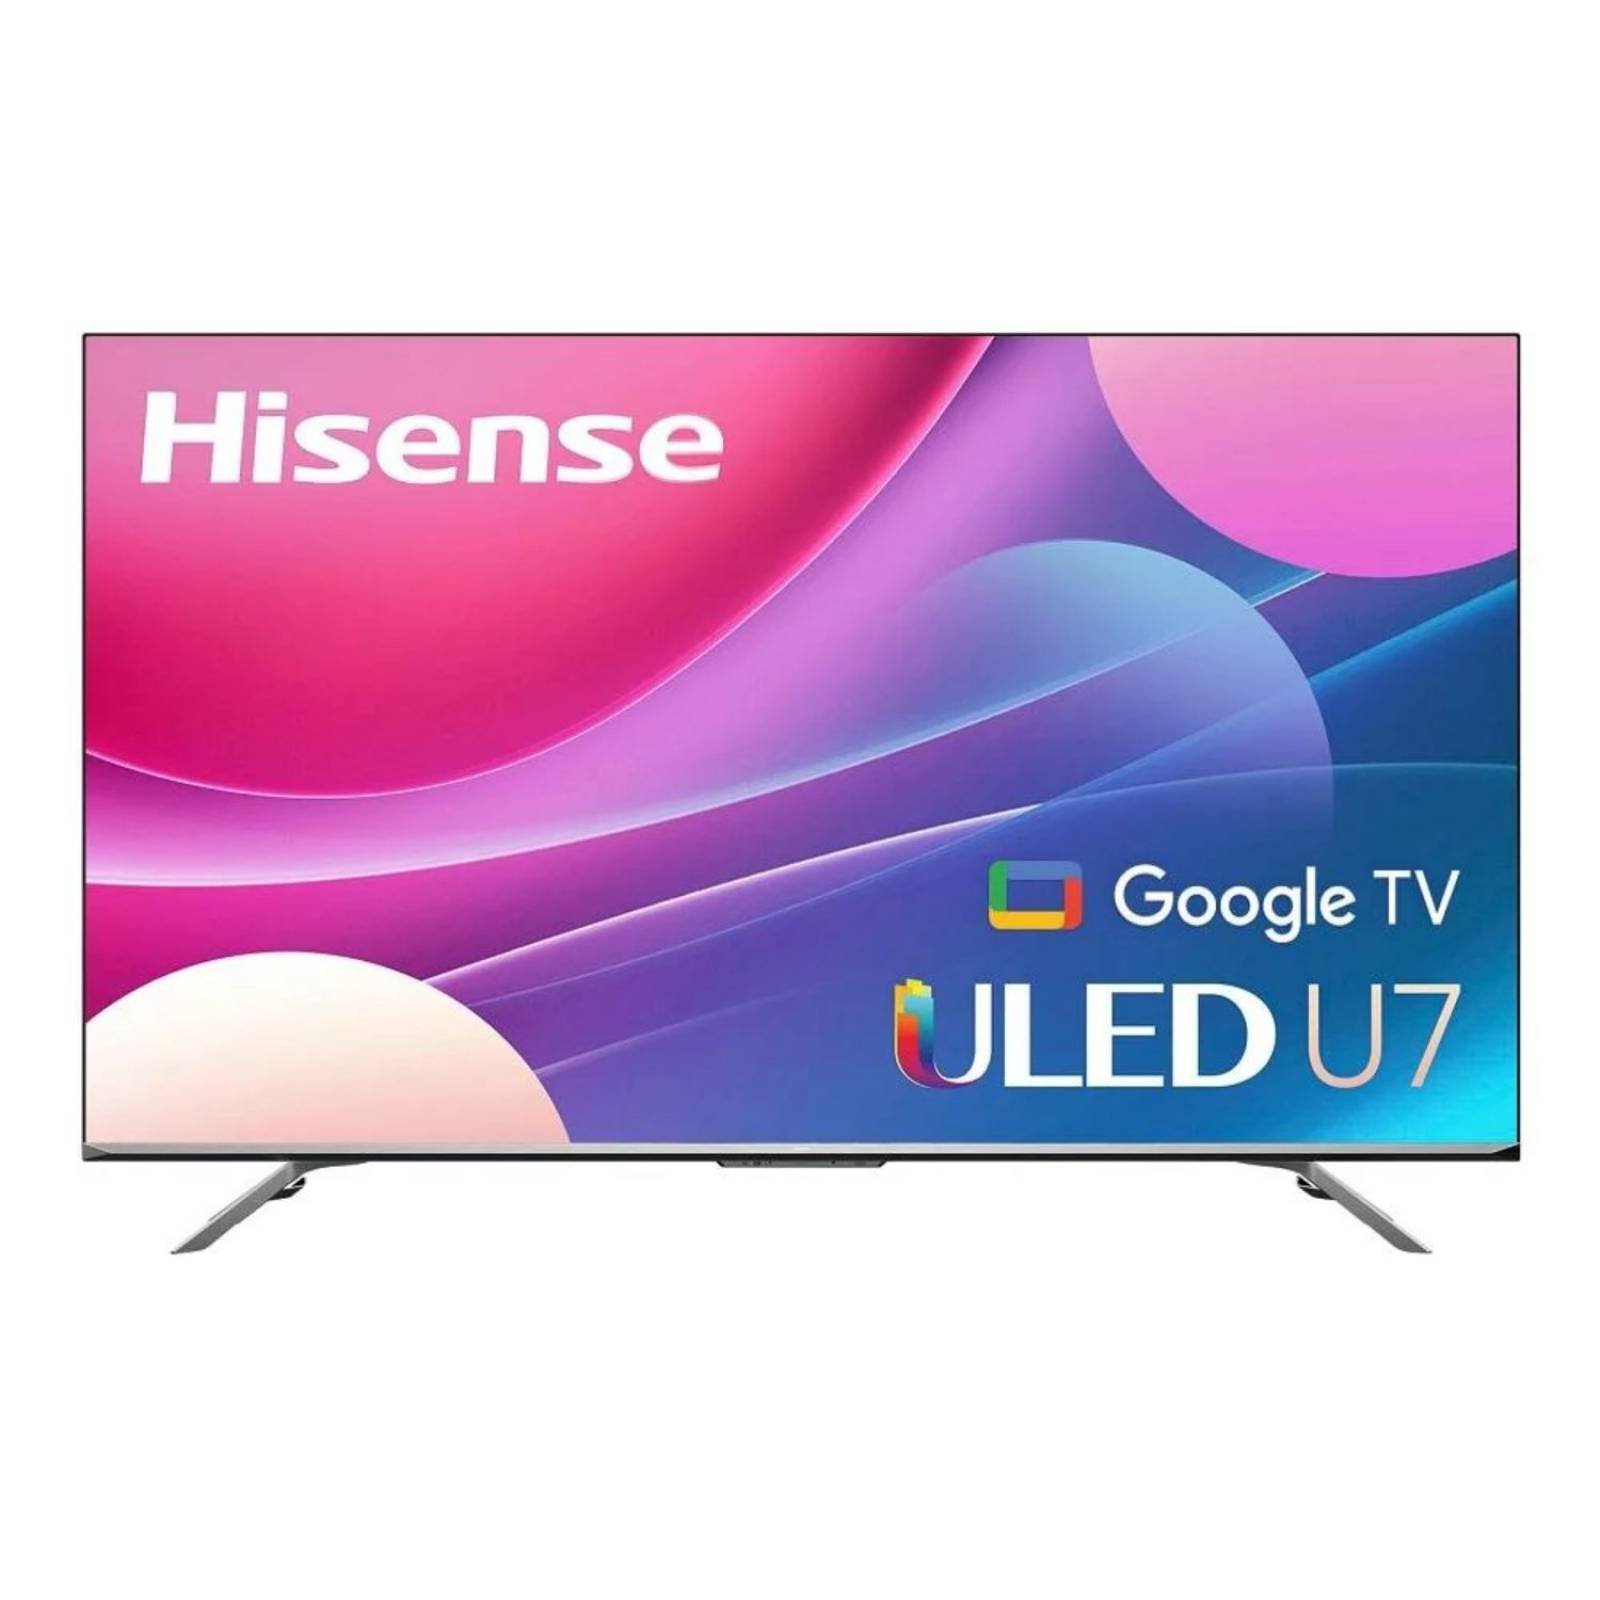 TV Hisense 55 ULED 4K 3840 X 2160P 240HZ Smart TV Google Asistant